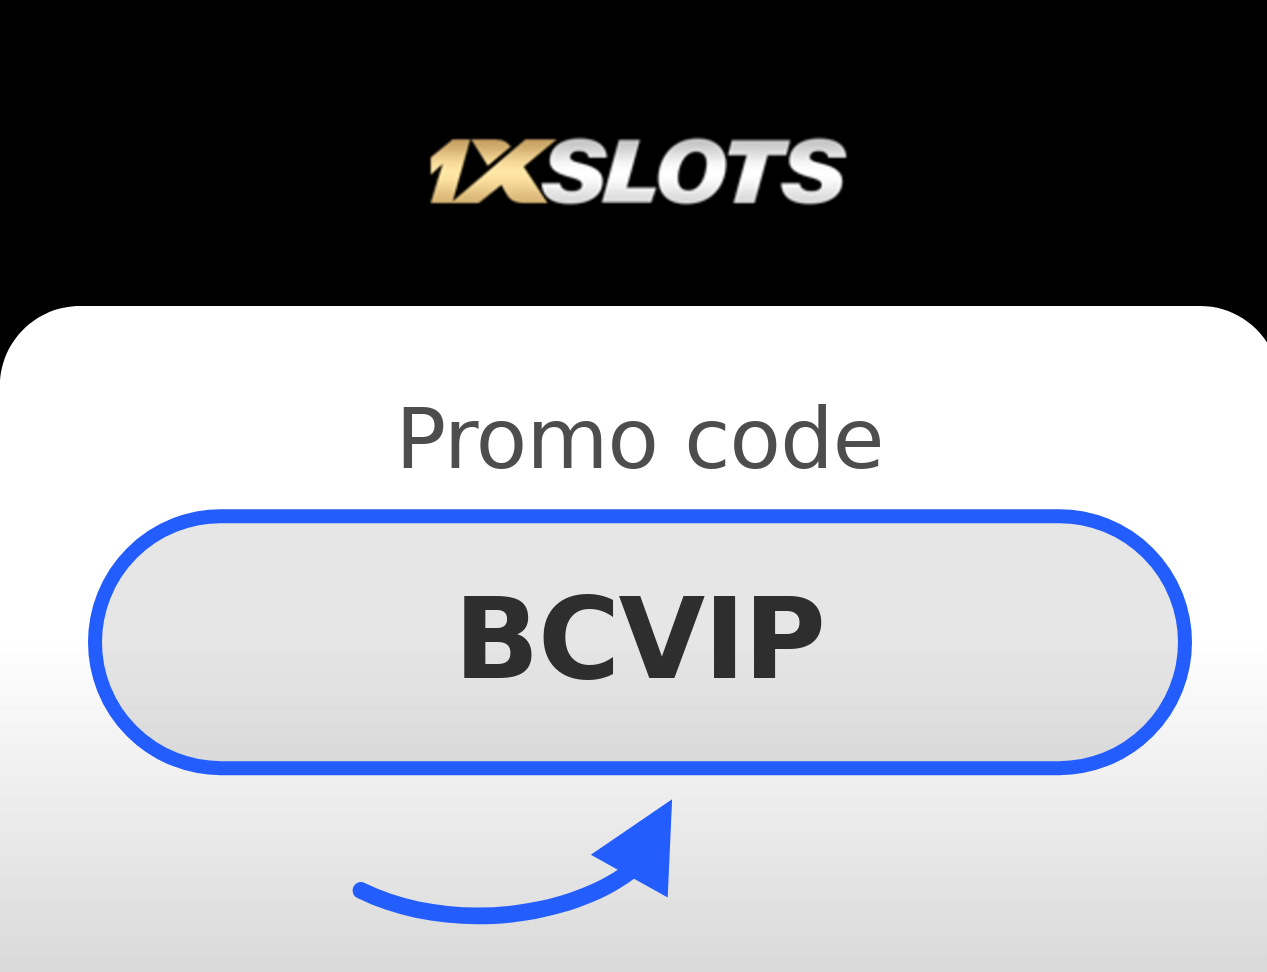 1XSLOTS Promo Code: BCVIP